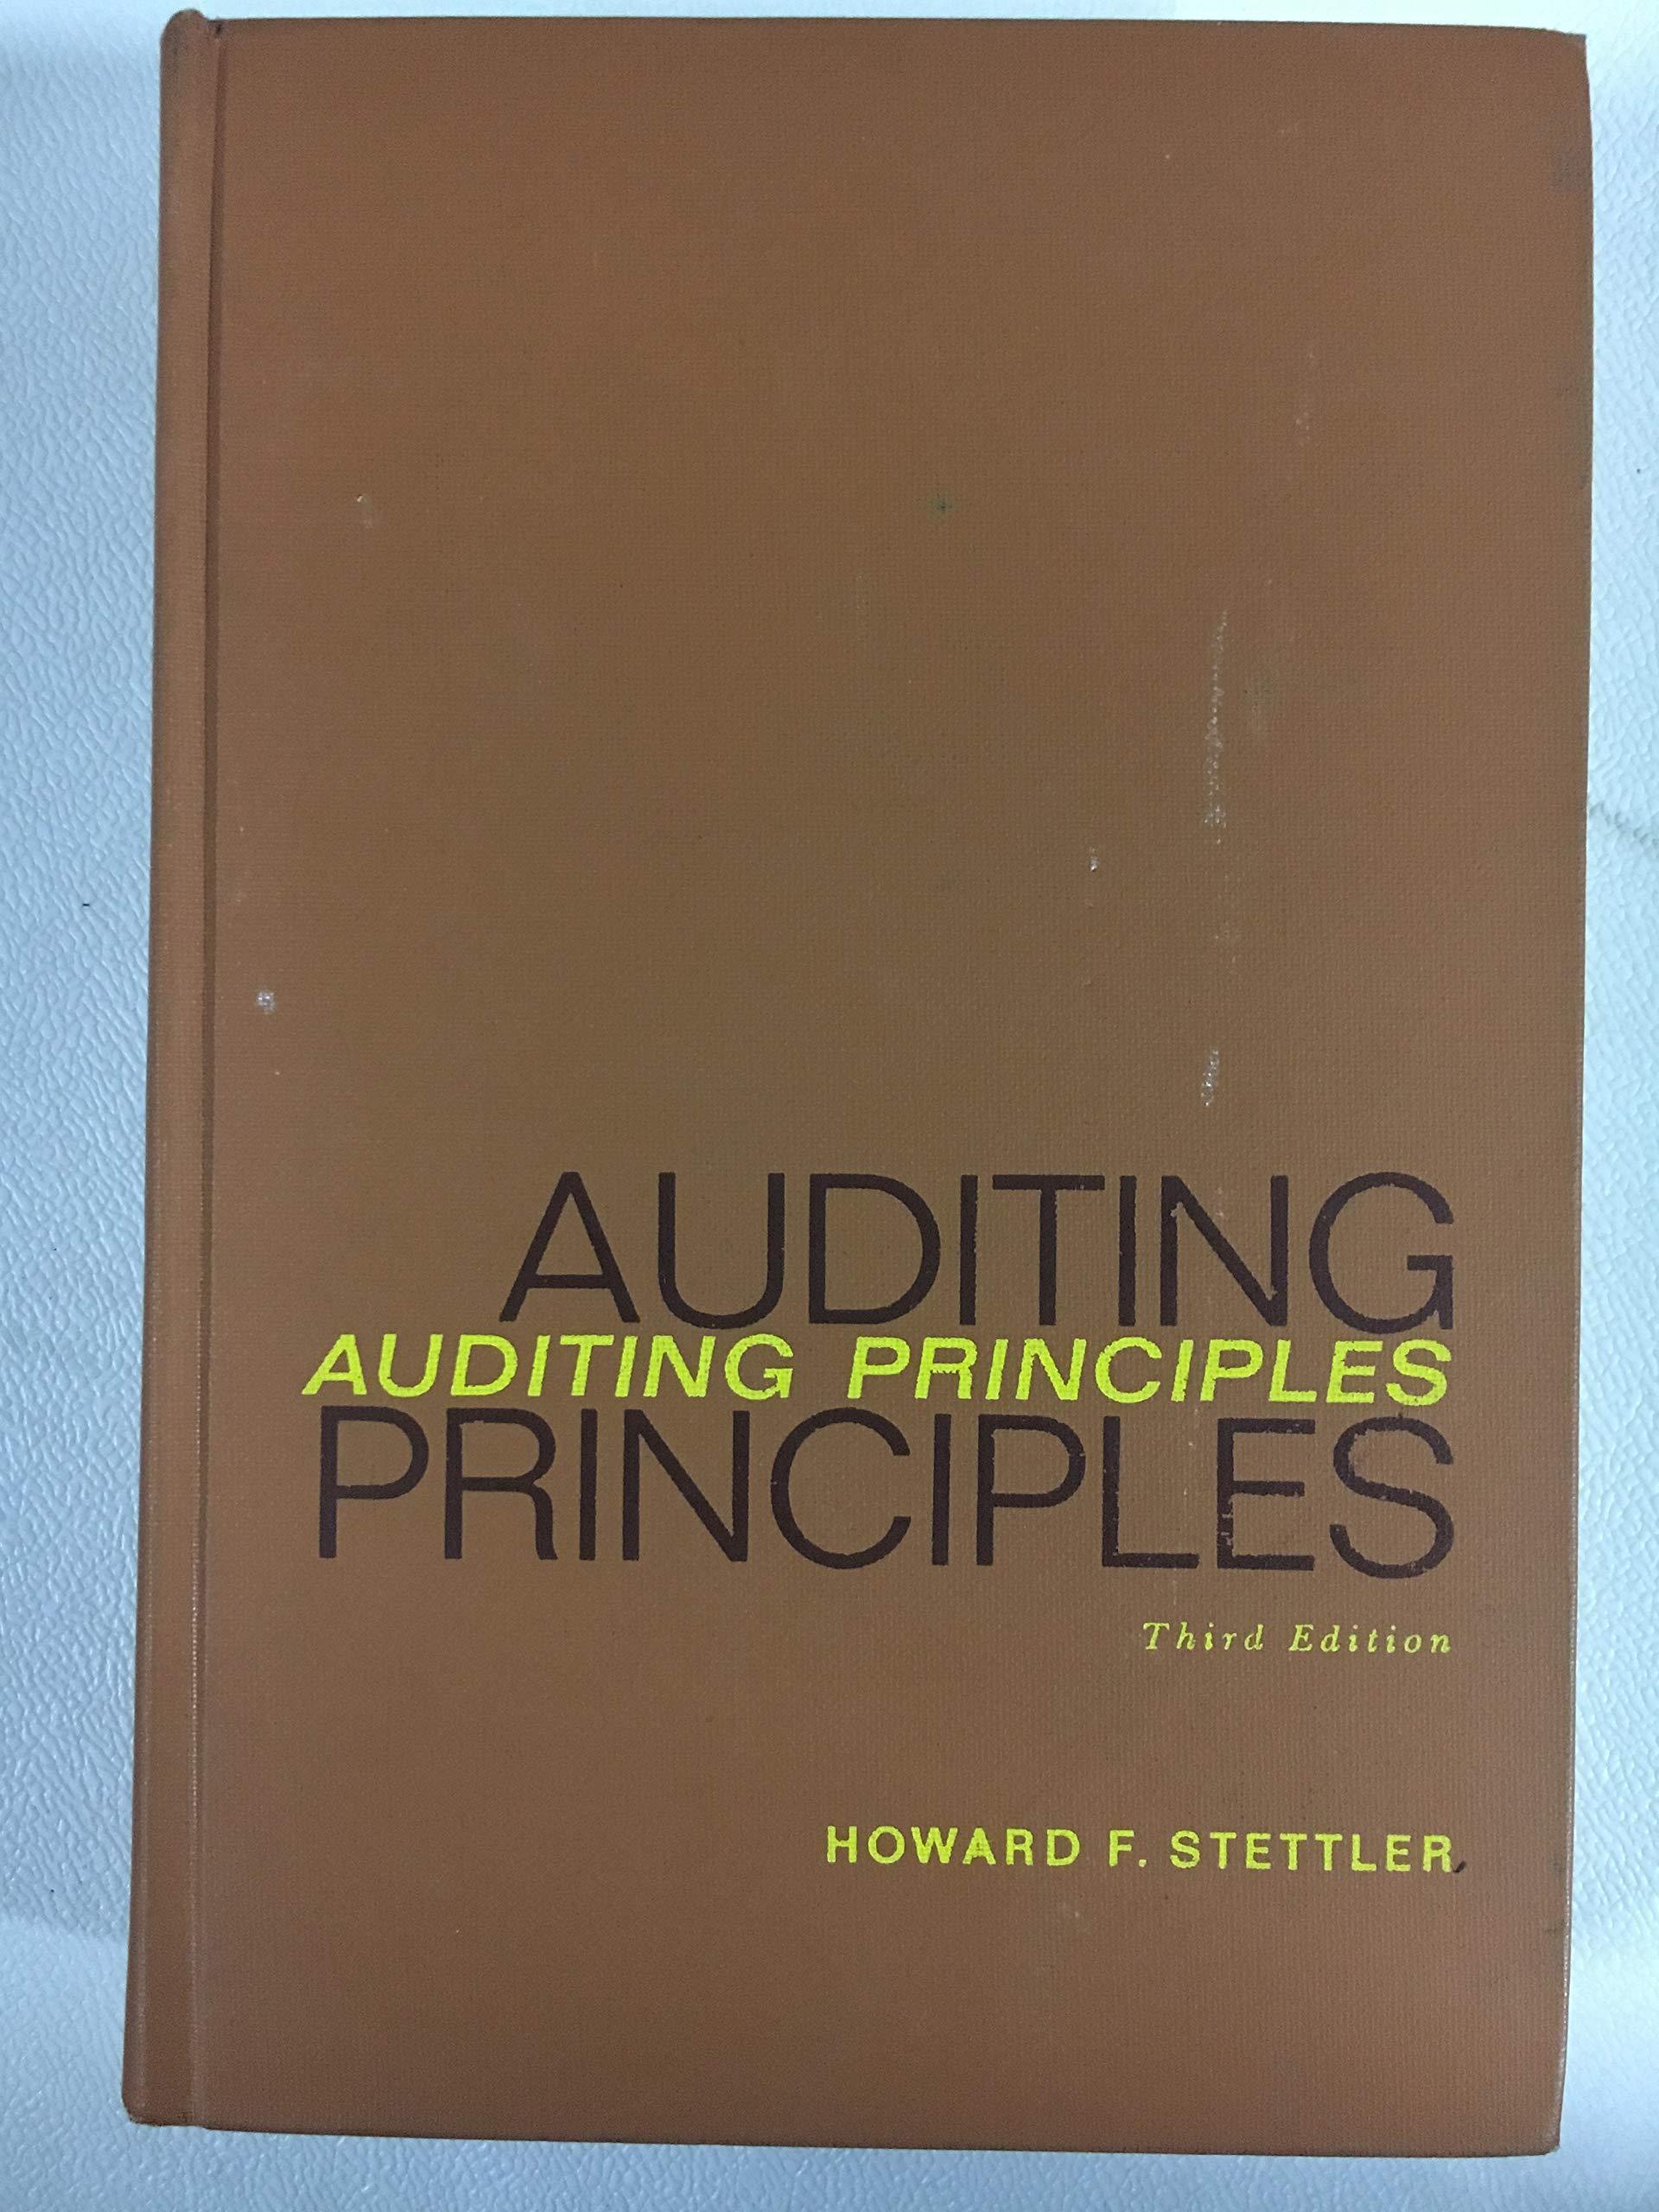 auditing principles 3rd edition howard f. stettler 0130521183, 9780130521187